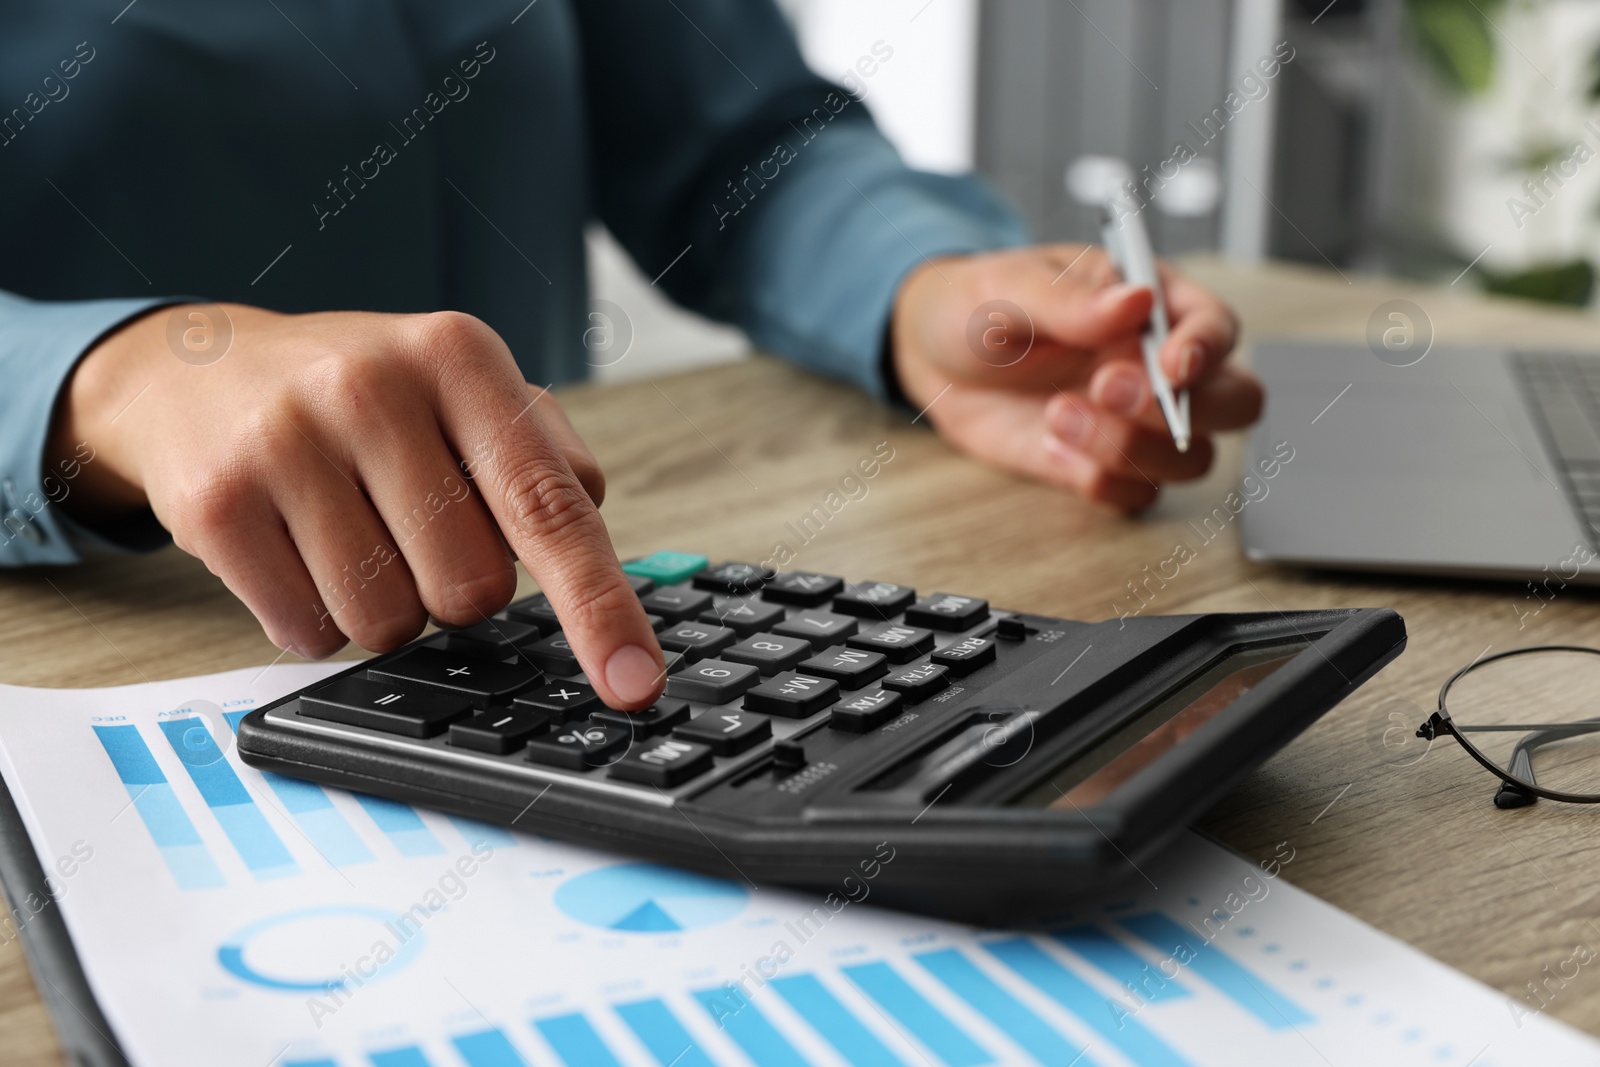 Photo of Woman using calculator at wooden table, closeup